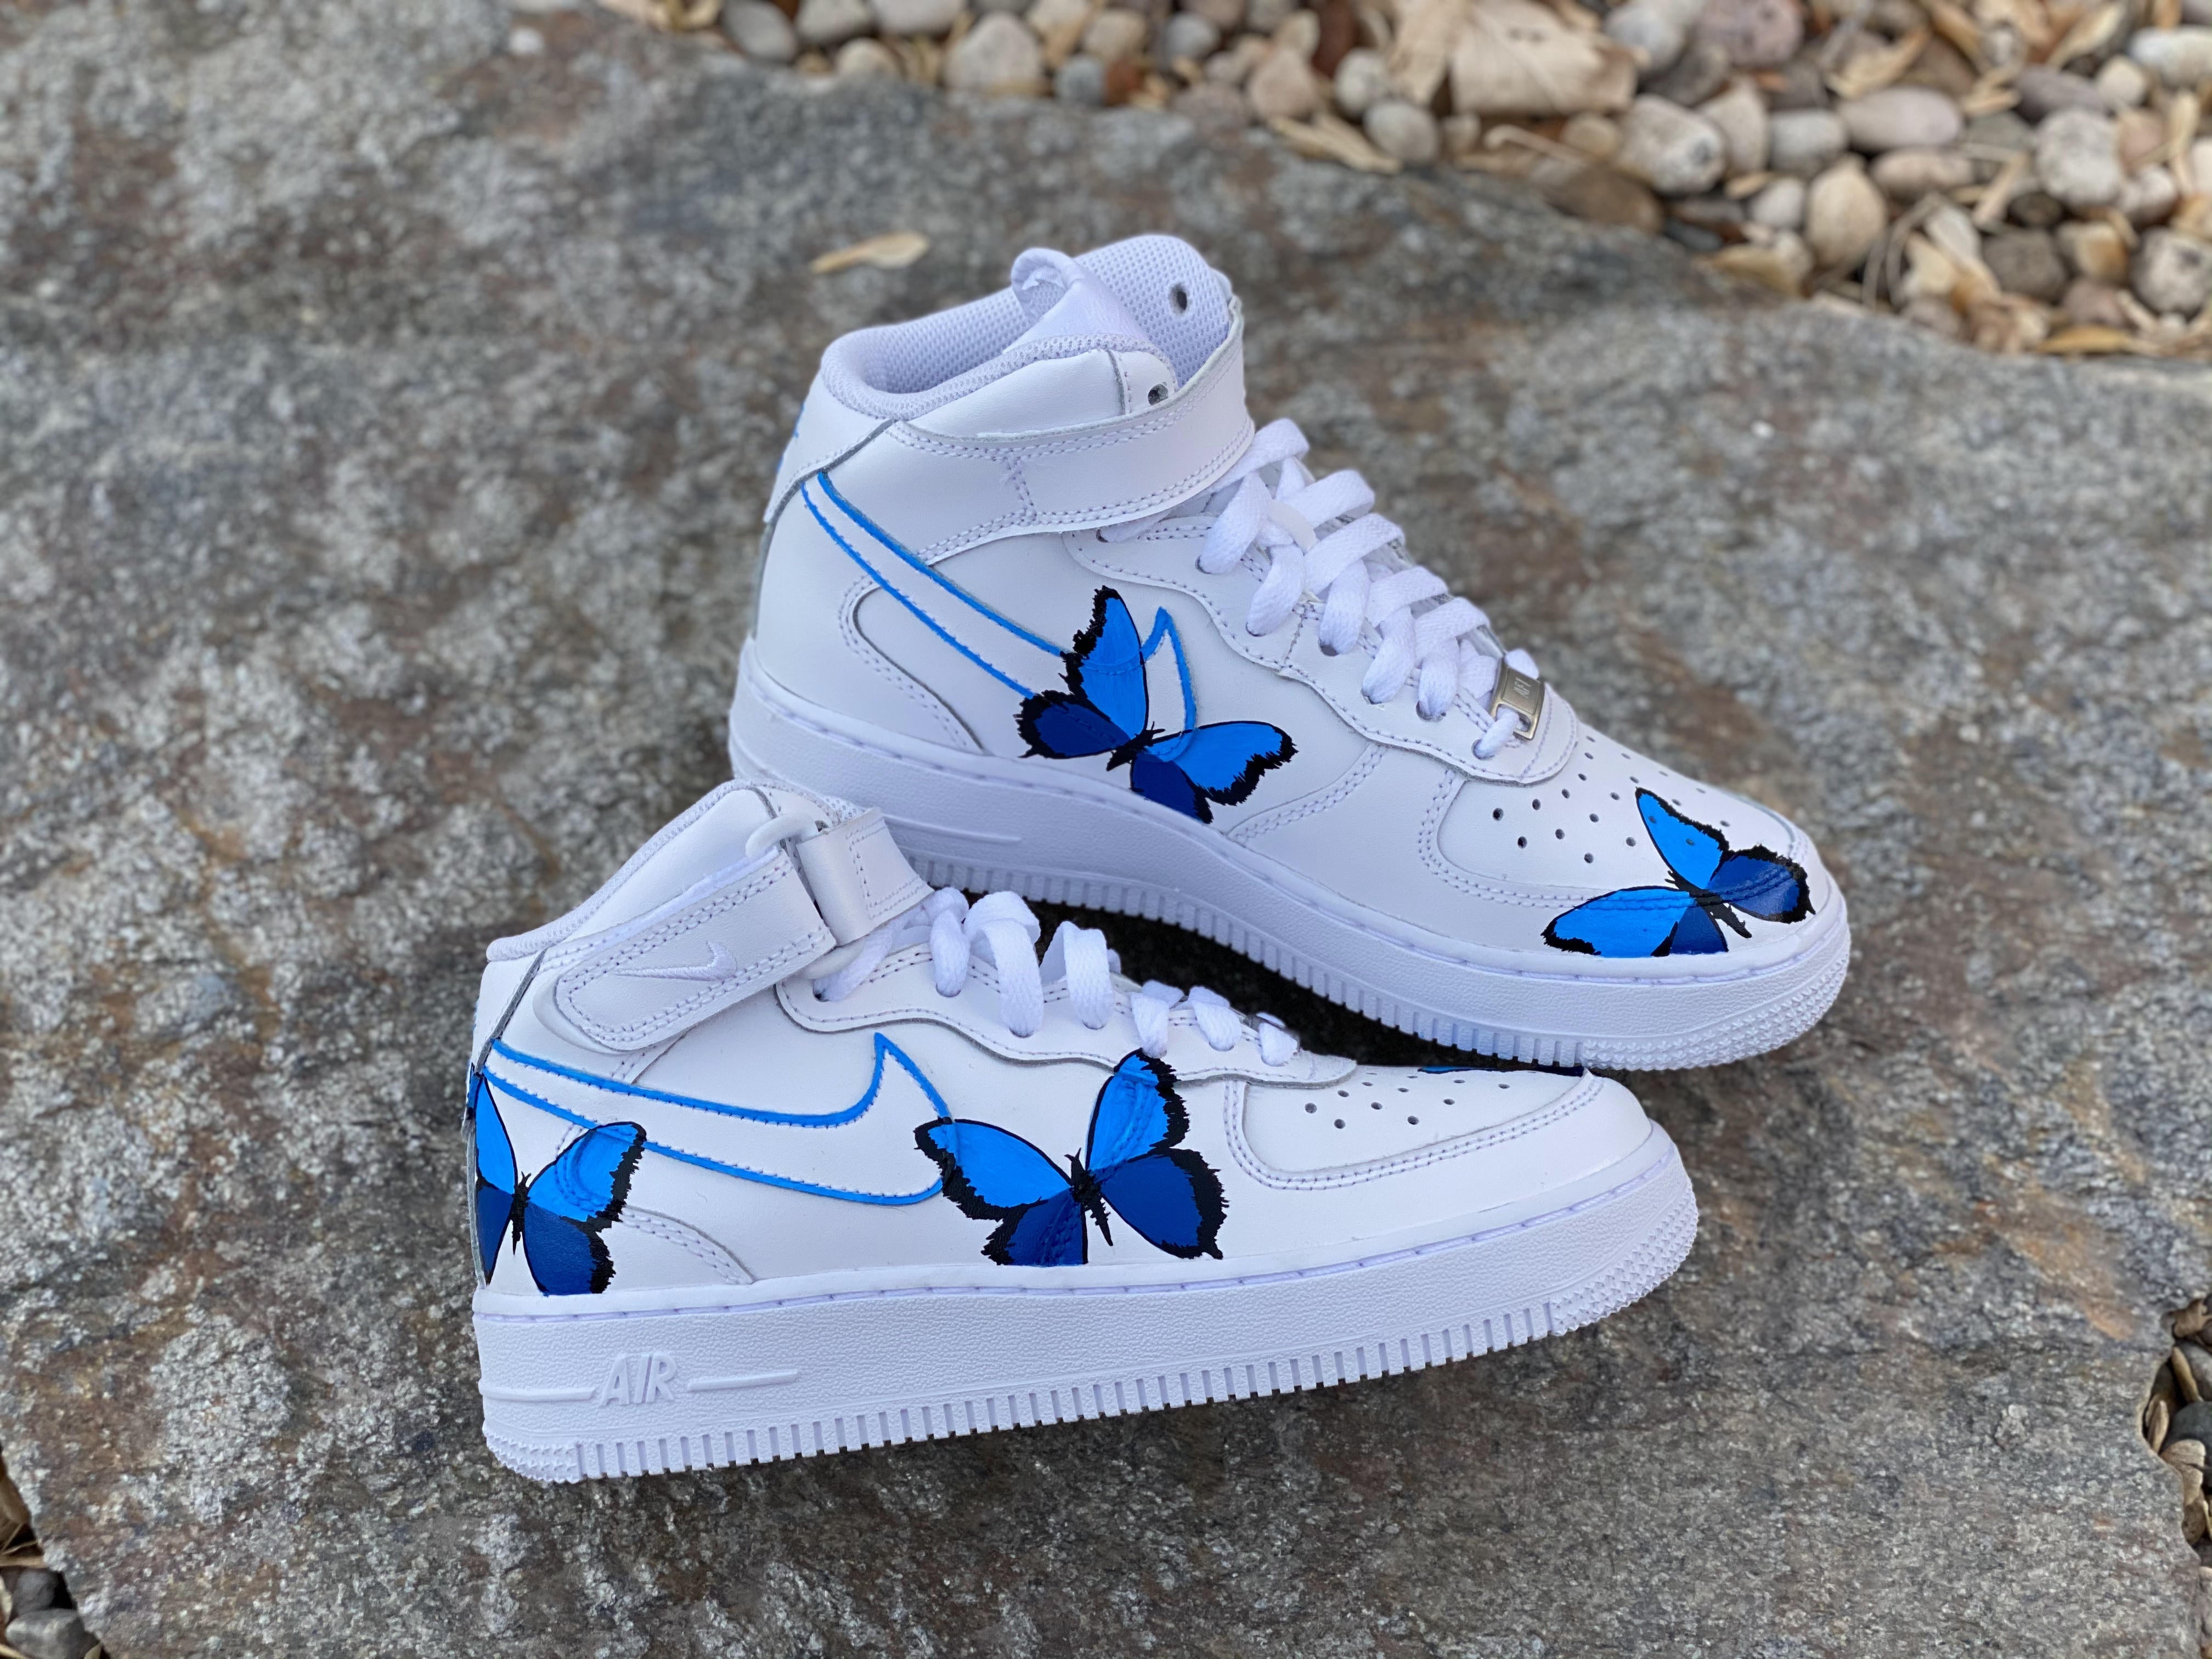 Custom Painted Nike Air Force One Mid-top Light Blue Sneakers 